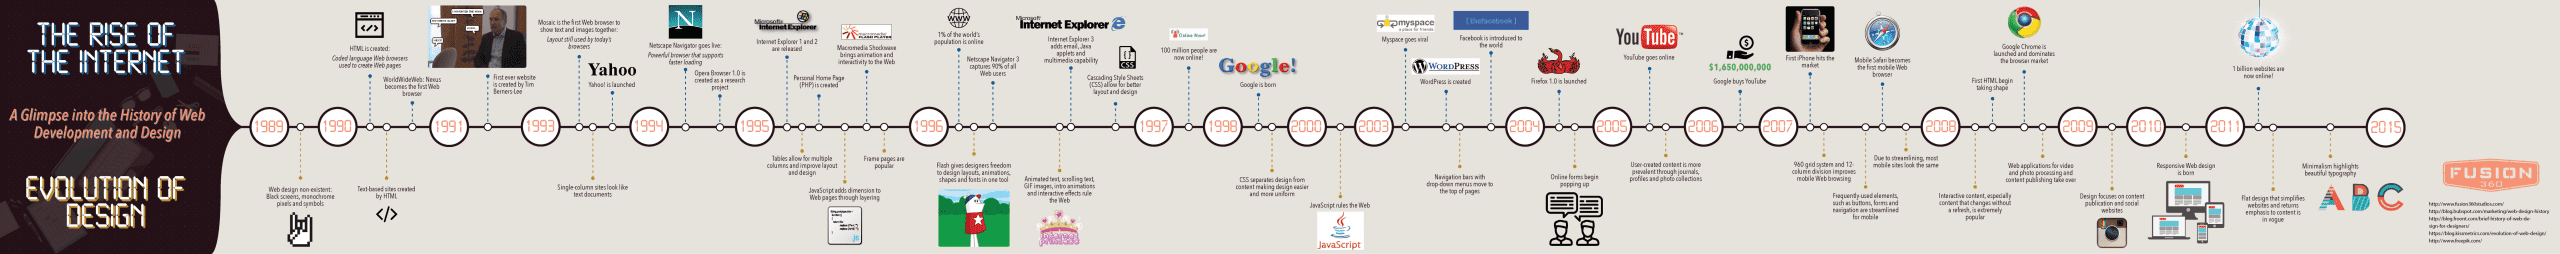 History of Web Development IG